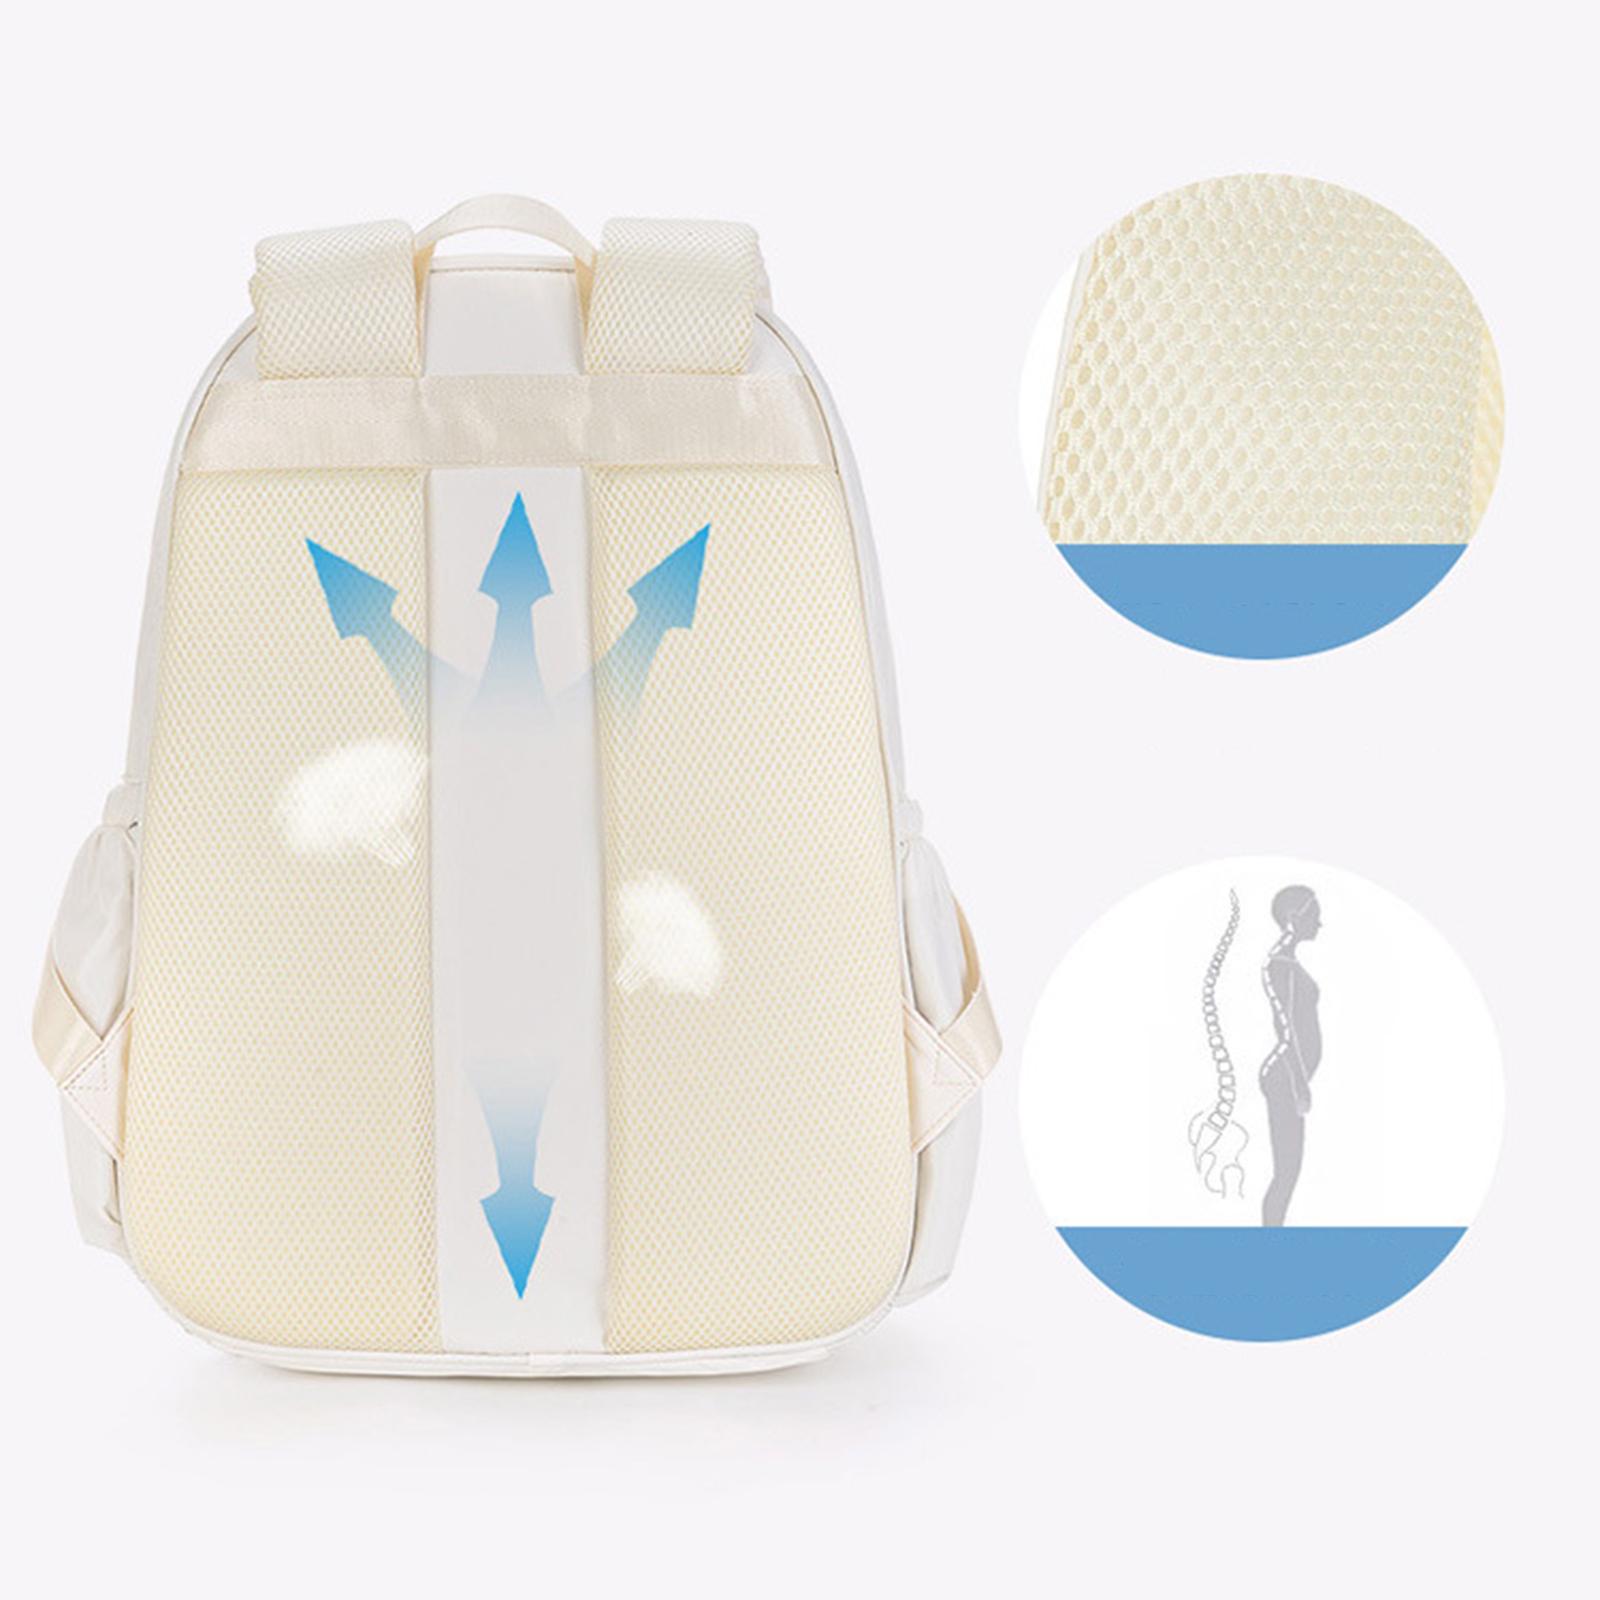 Tennis Backpack Tennis Bag Racket Holder for Tennis Racket Balls Accessories White